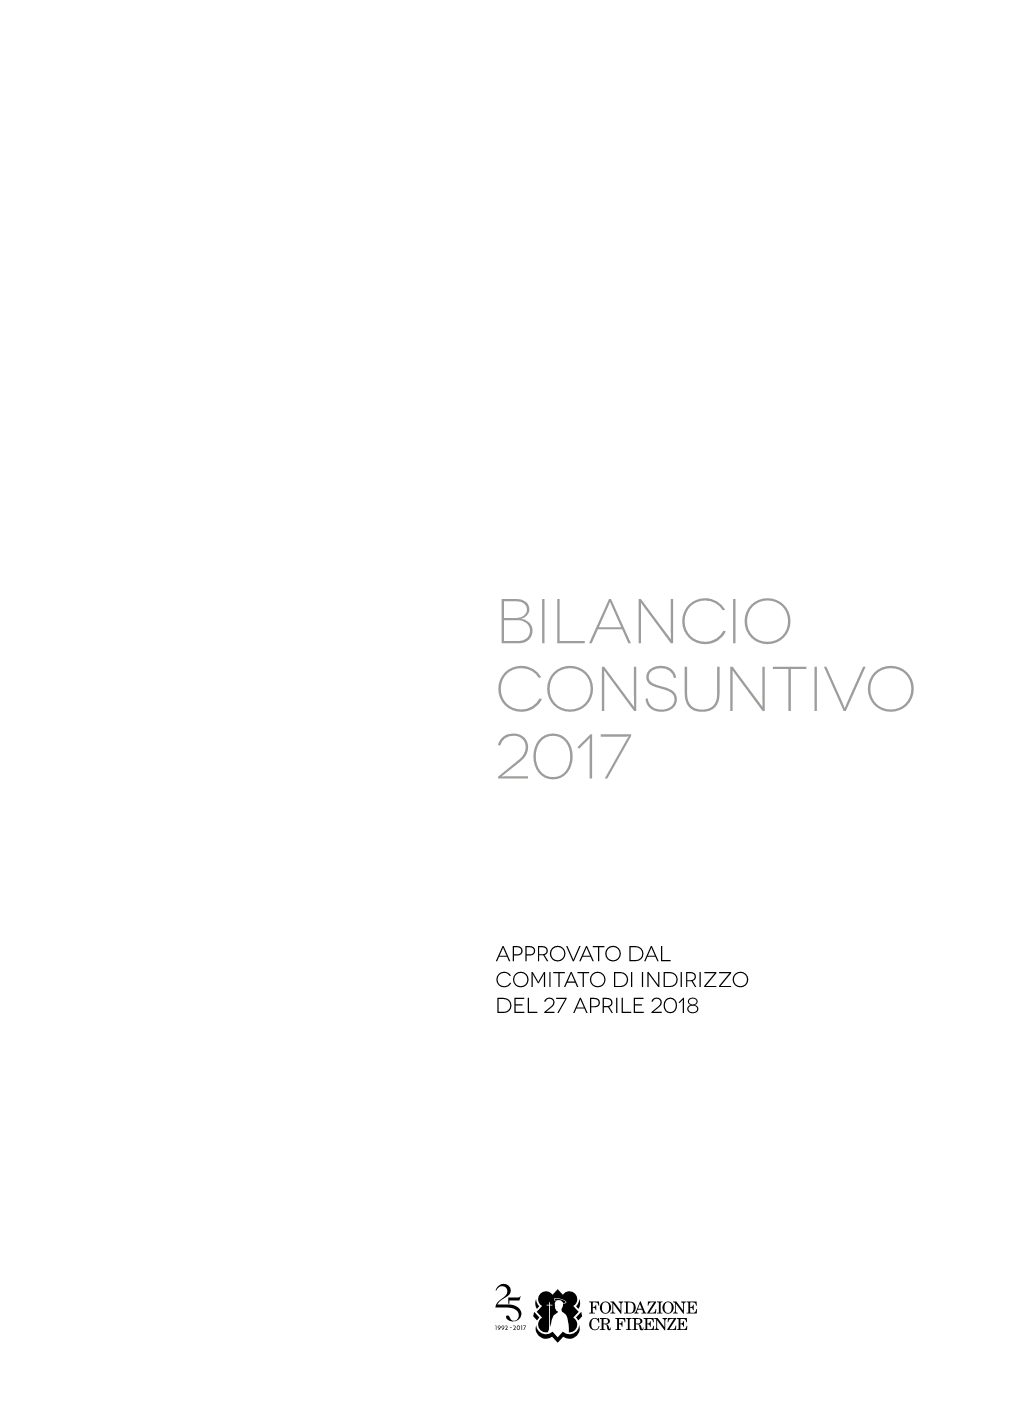 Bilancio Consuntivo 2017